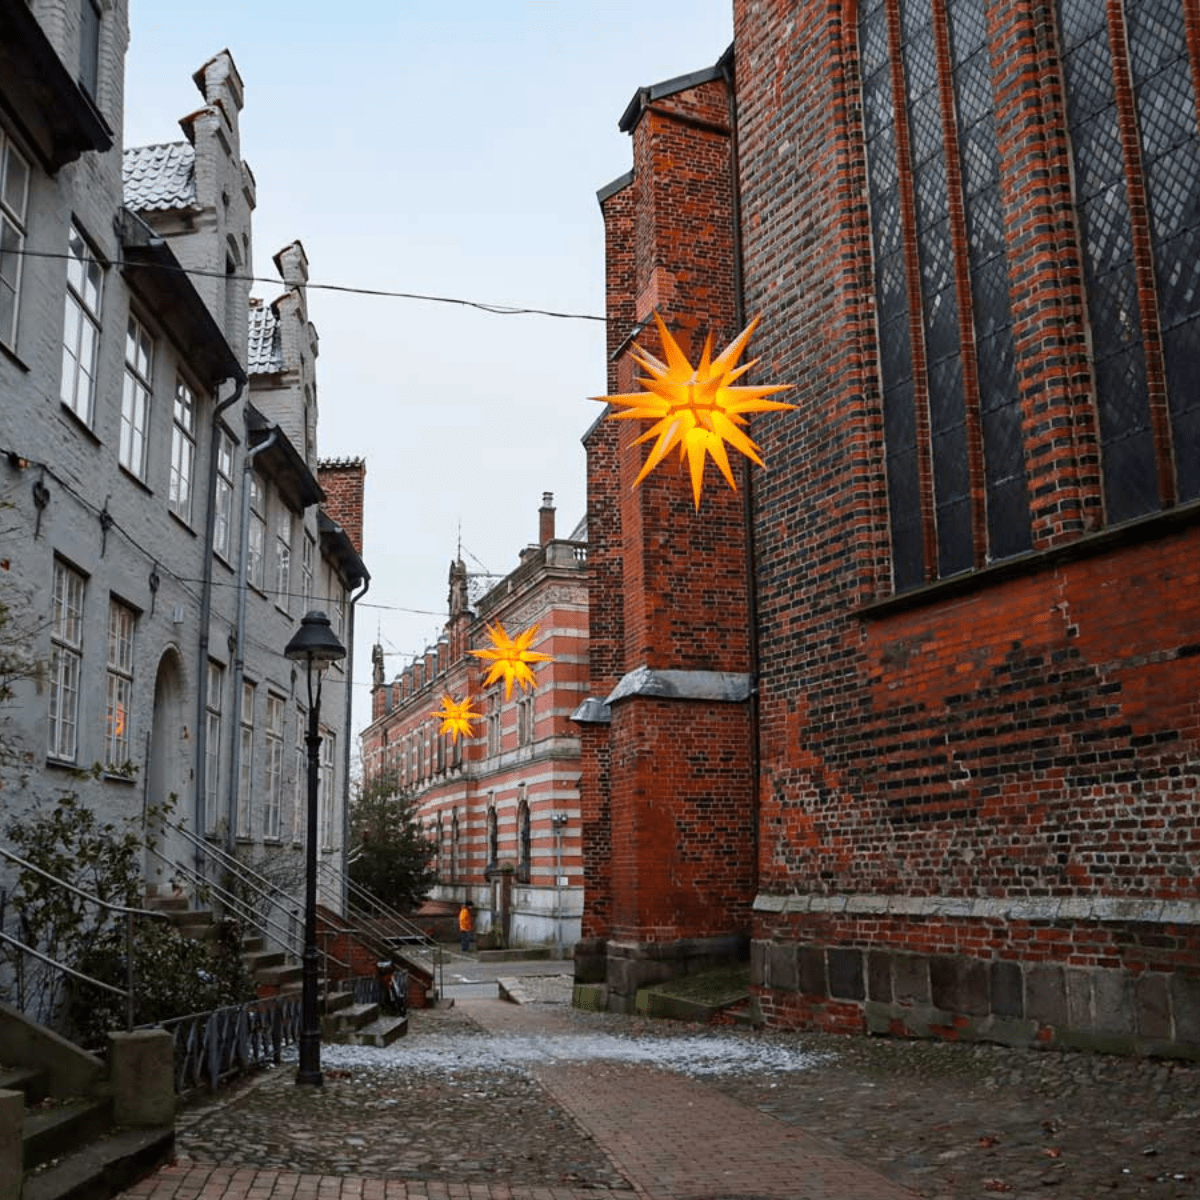 Adventsreise nach Lübeck, Altstadt